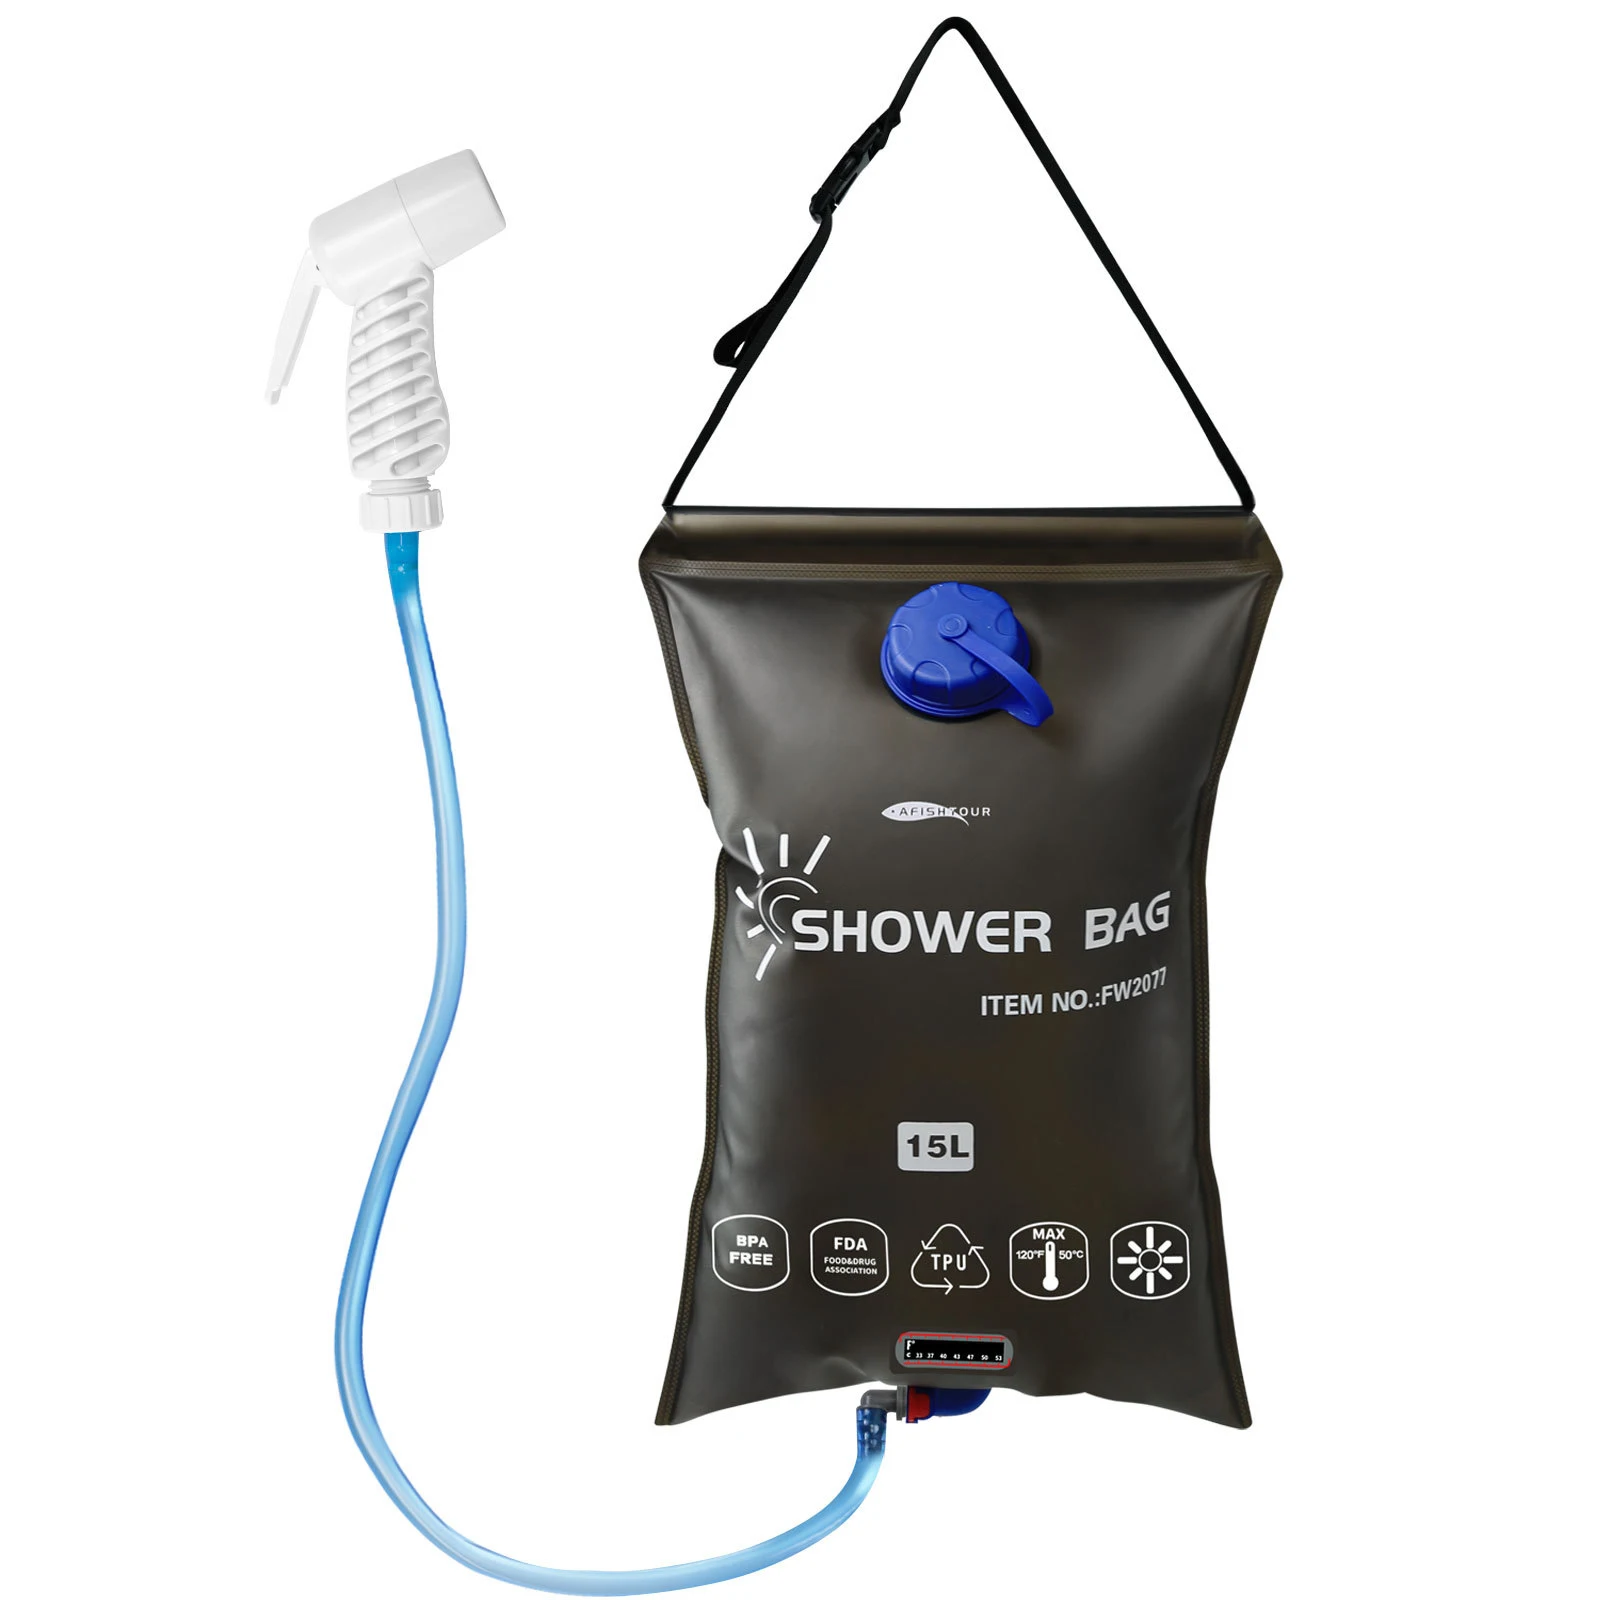 E outdoor camping hiking solar shower bag heating camping shower climbing hydration bag thumb200